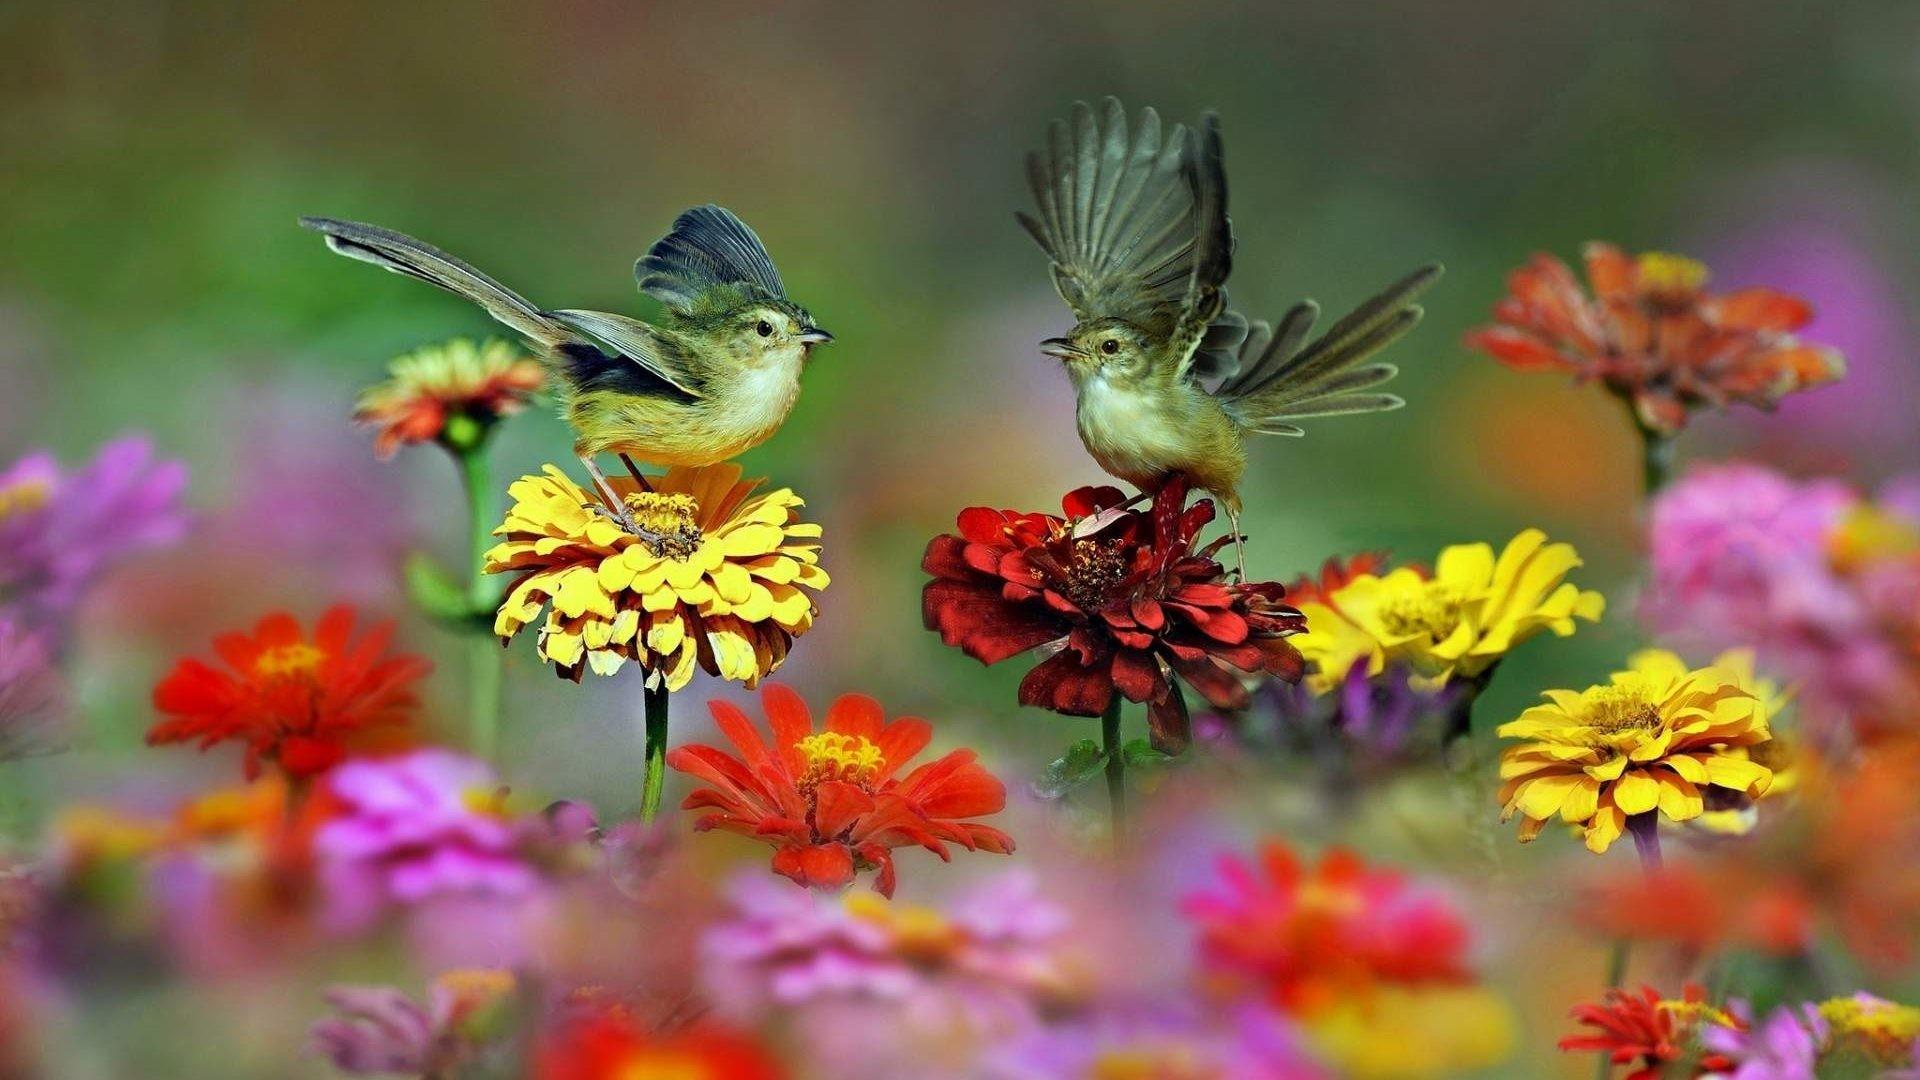 Nature Wallpaper With Birds | Nature Wallpaper